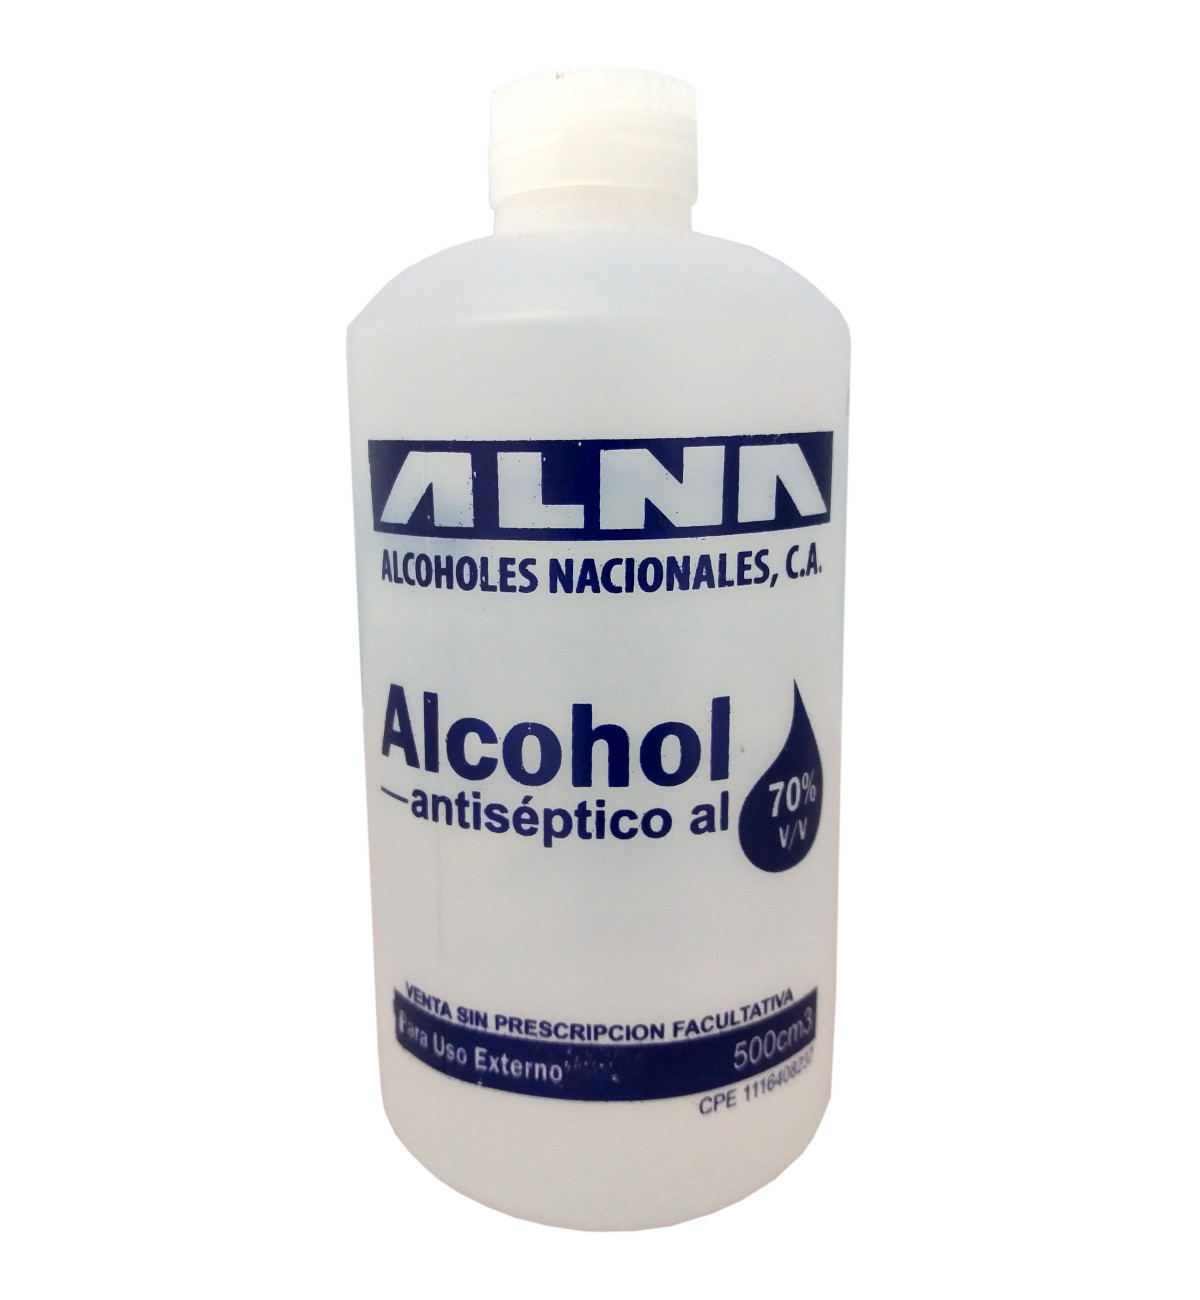 Alcohol Antisptico ALNA 500 cc (E)